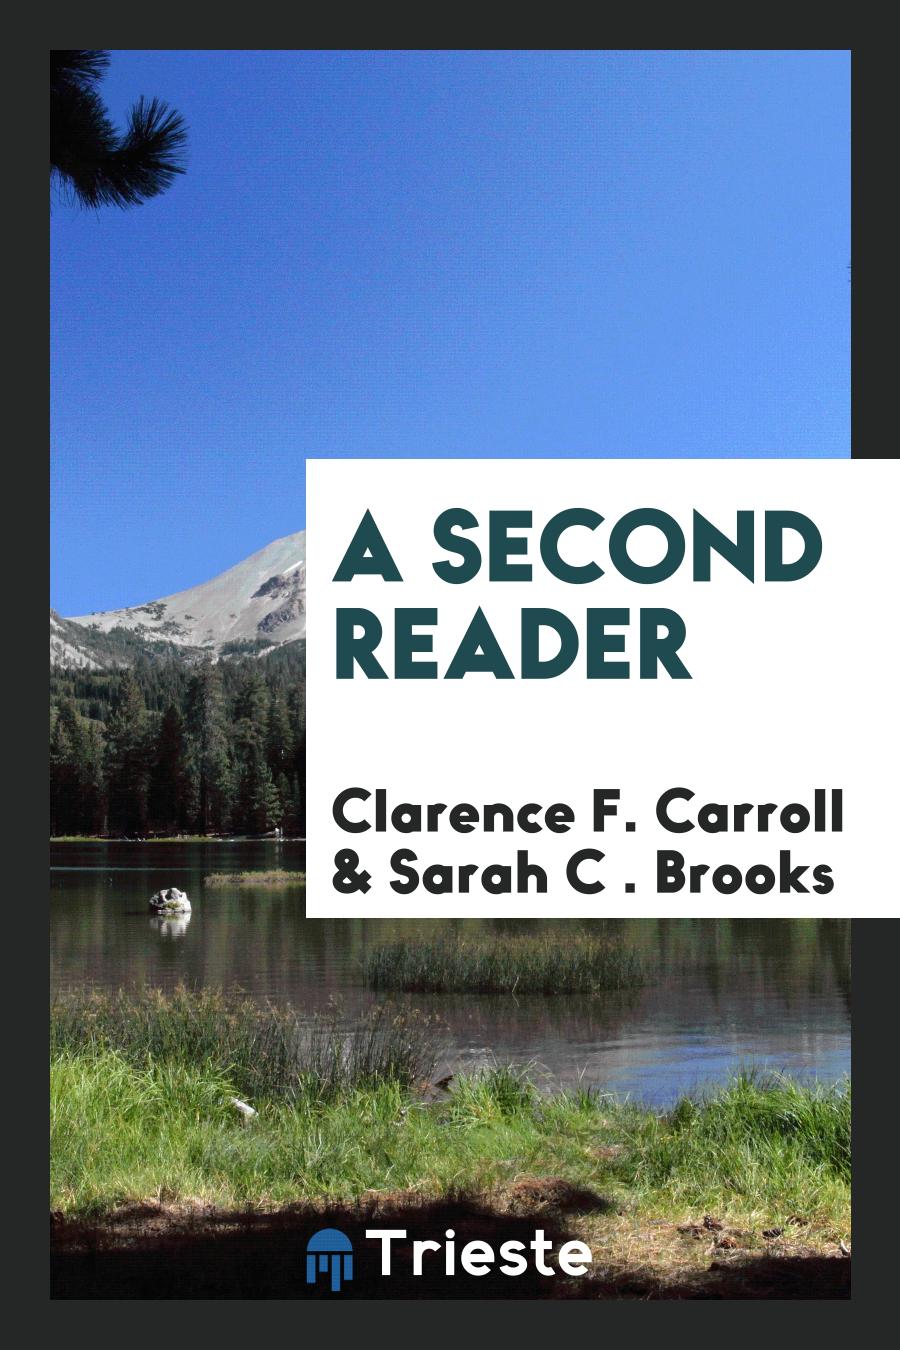 A Second Reader